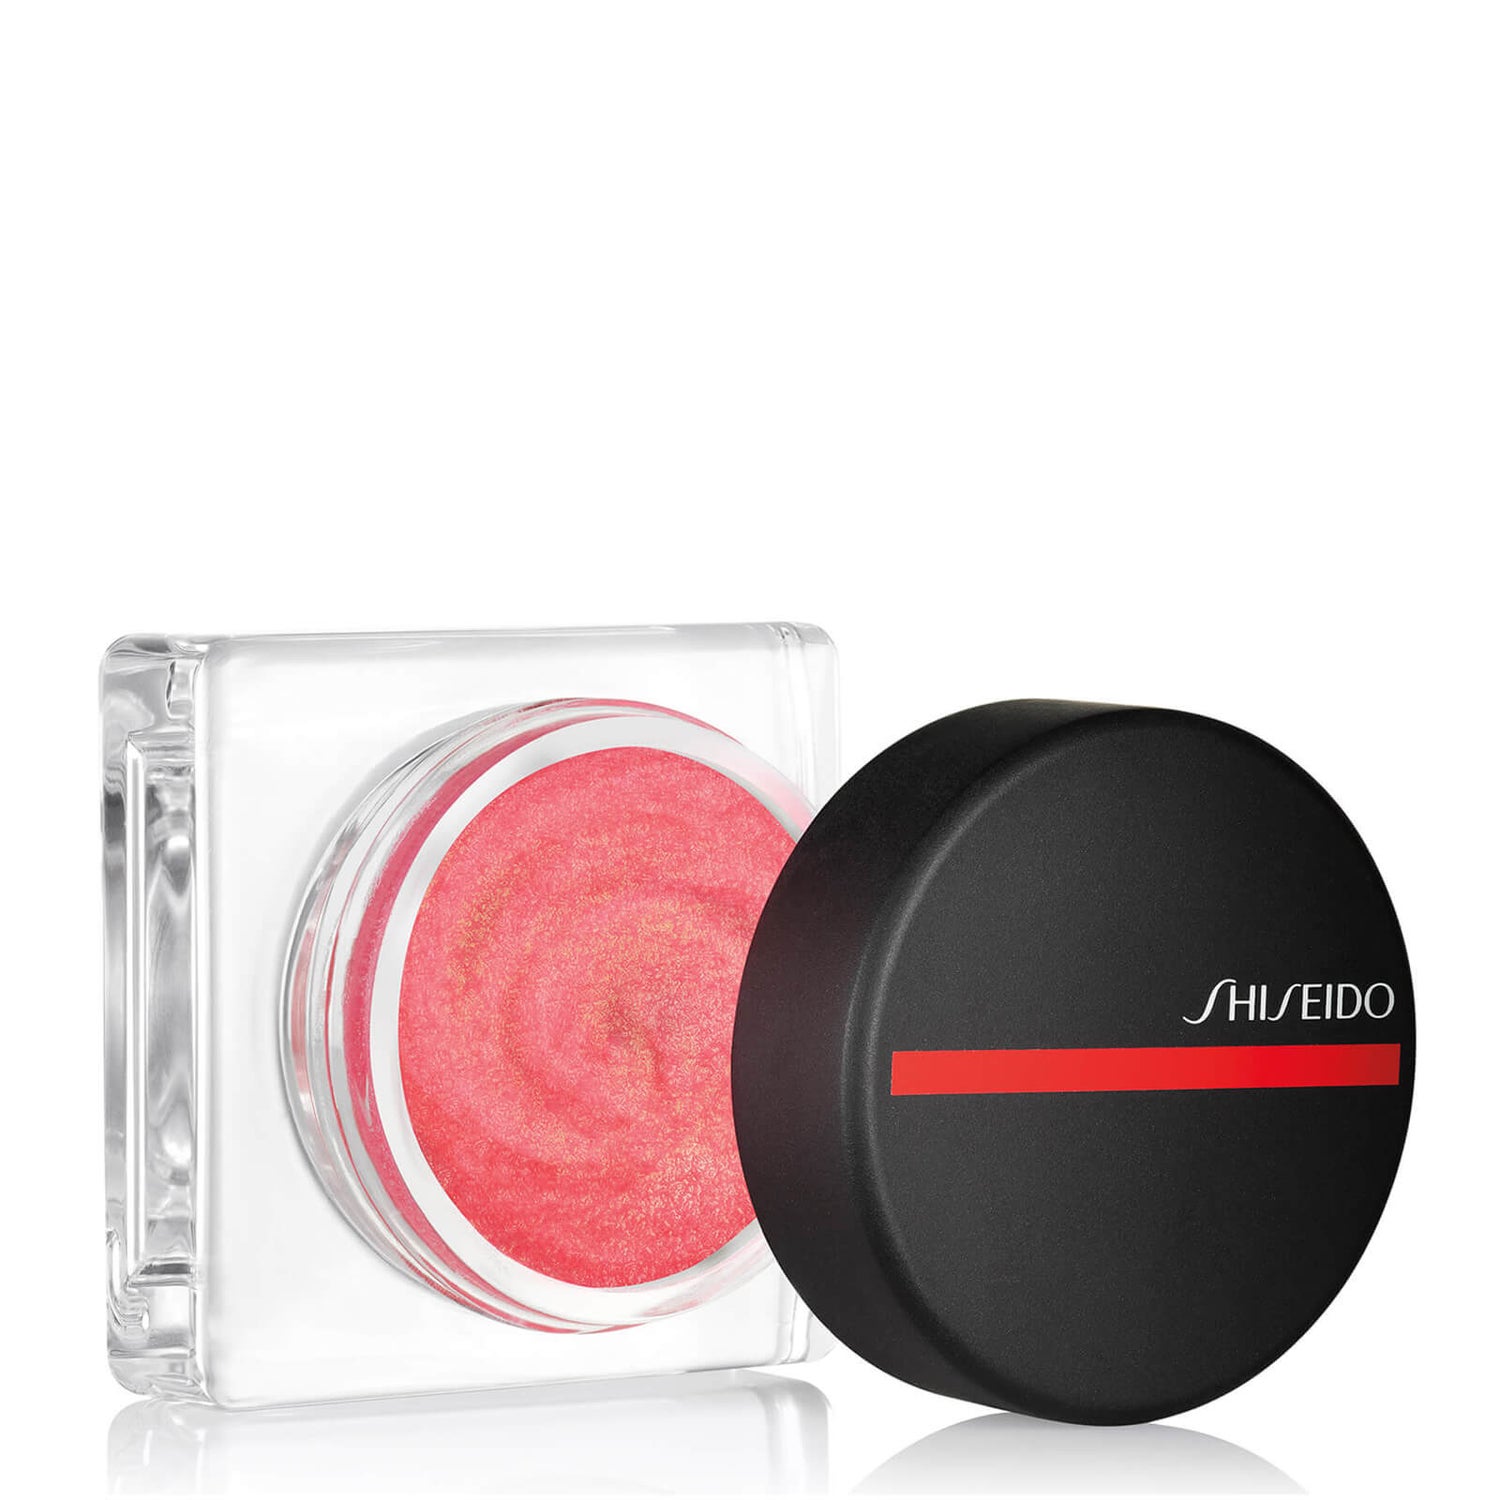 Shiseido Minimalist Whipped Powder Blush -poskipuna (useita sävyjä)